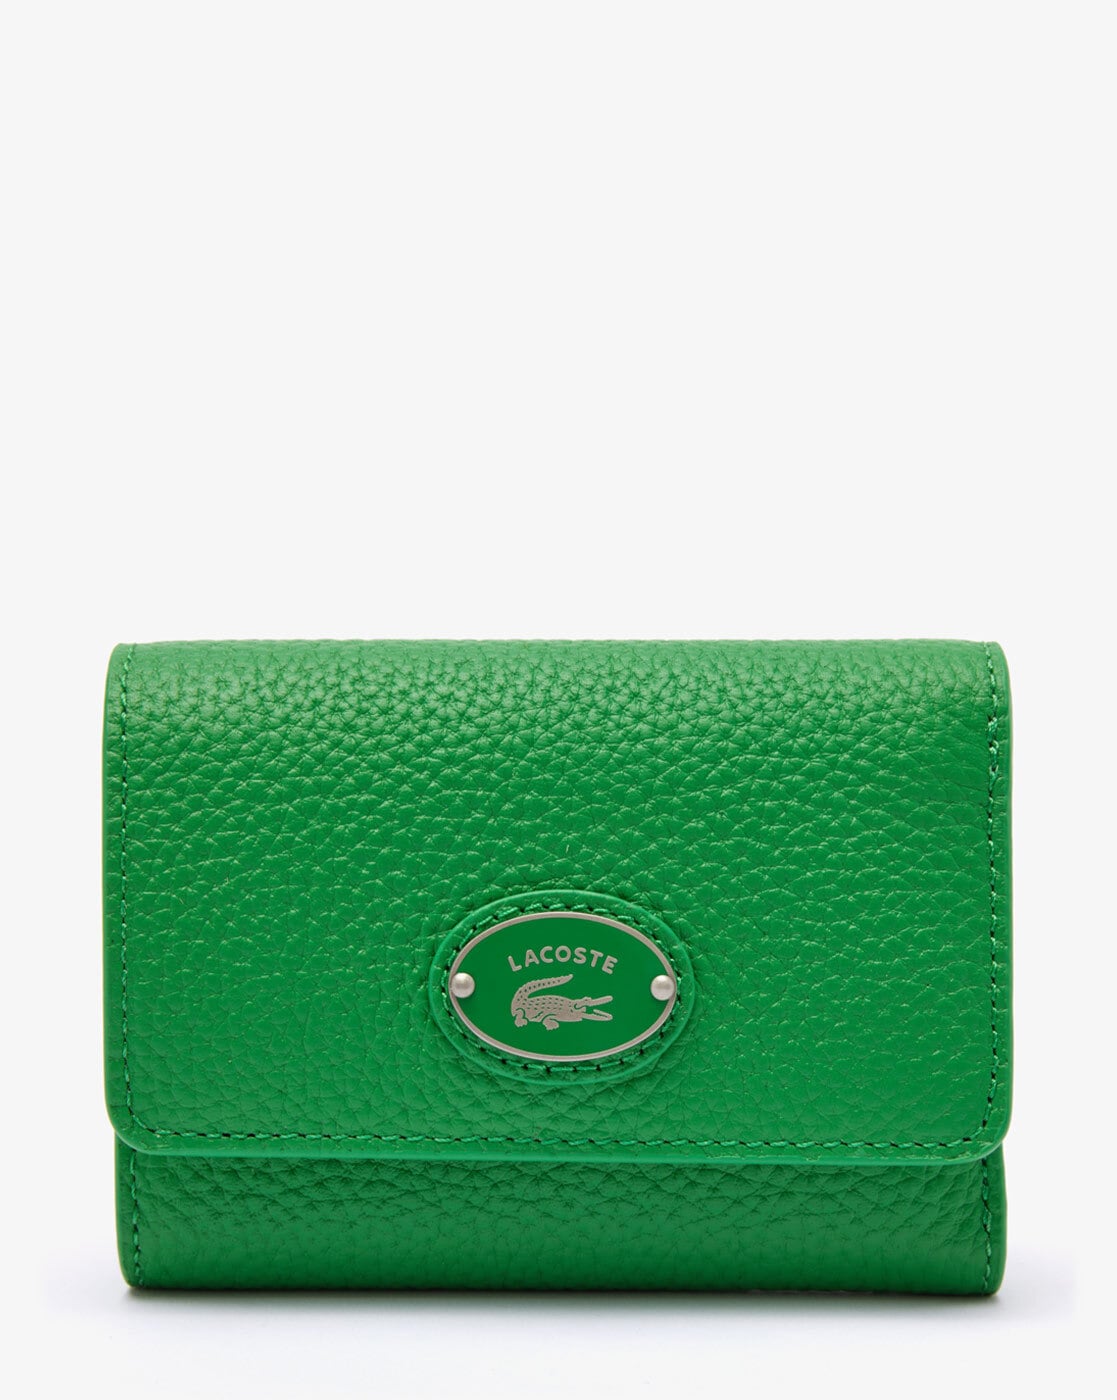 Lacoste | Bags | Lacoste Orange Leather Chantaco Wallet | Poshmark